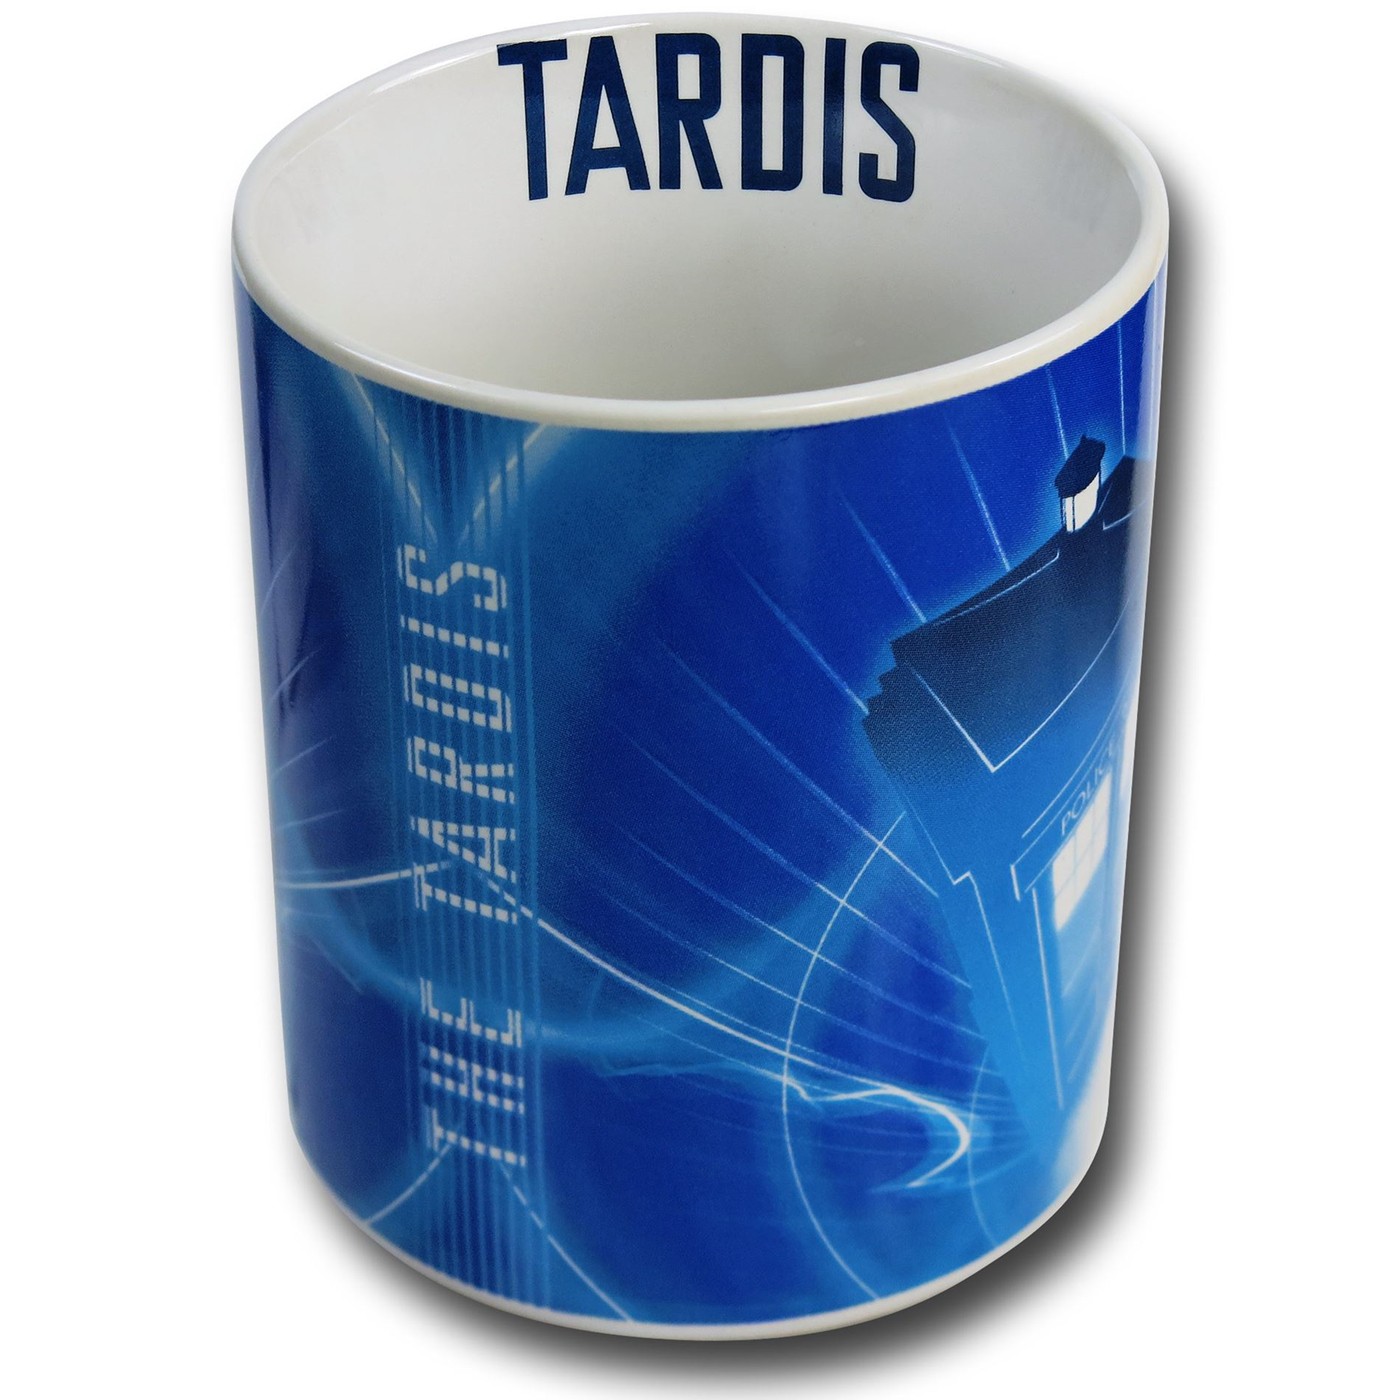 Doctor Who Tardis Blue & White Image Mug